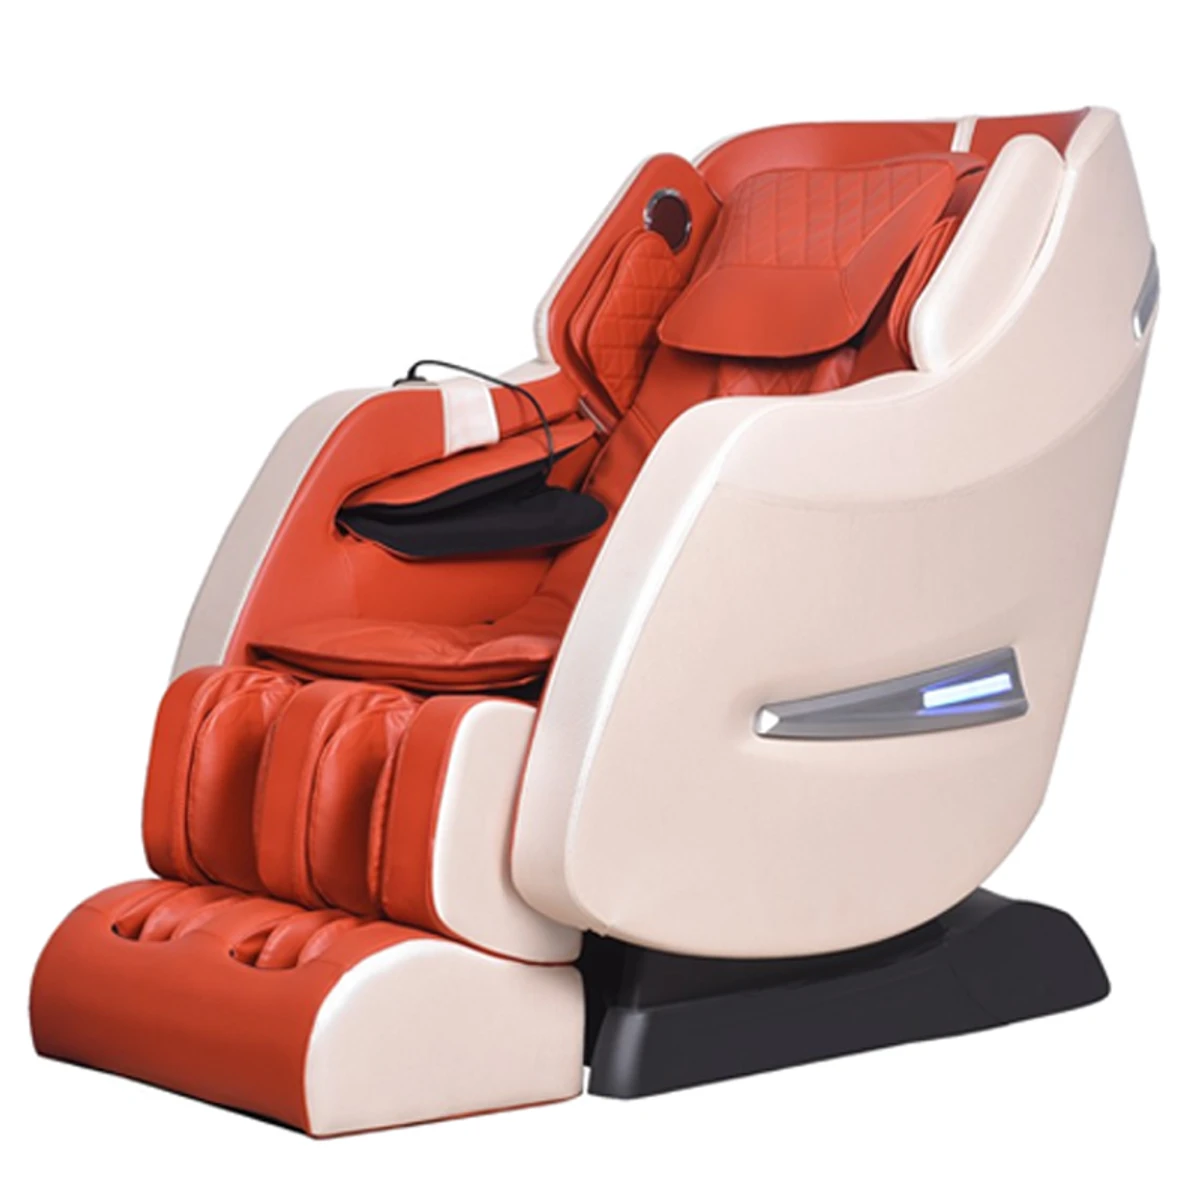 SL-95 Luxurious Body Massage Chair